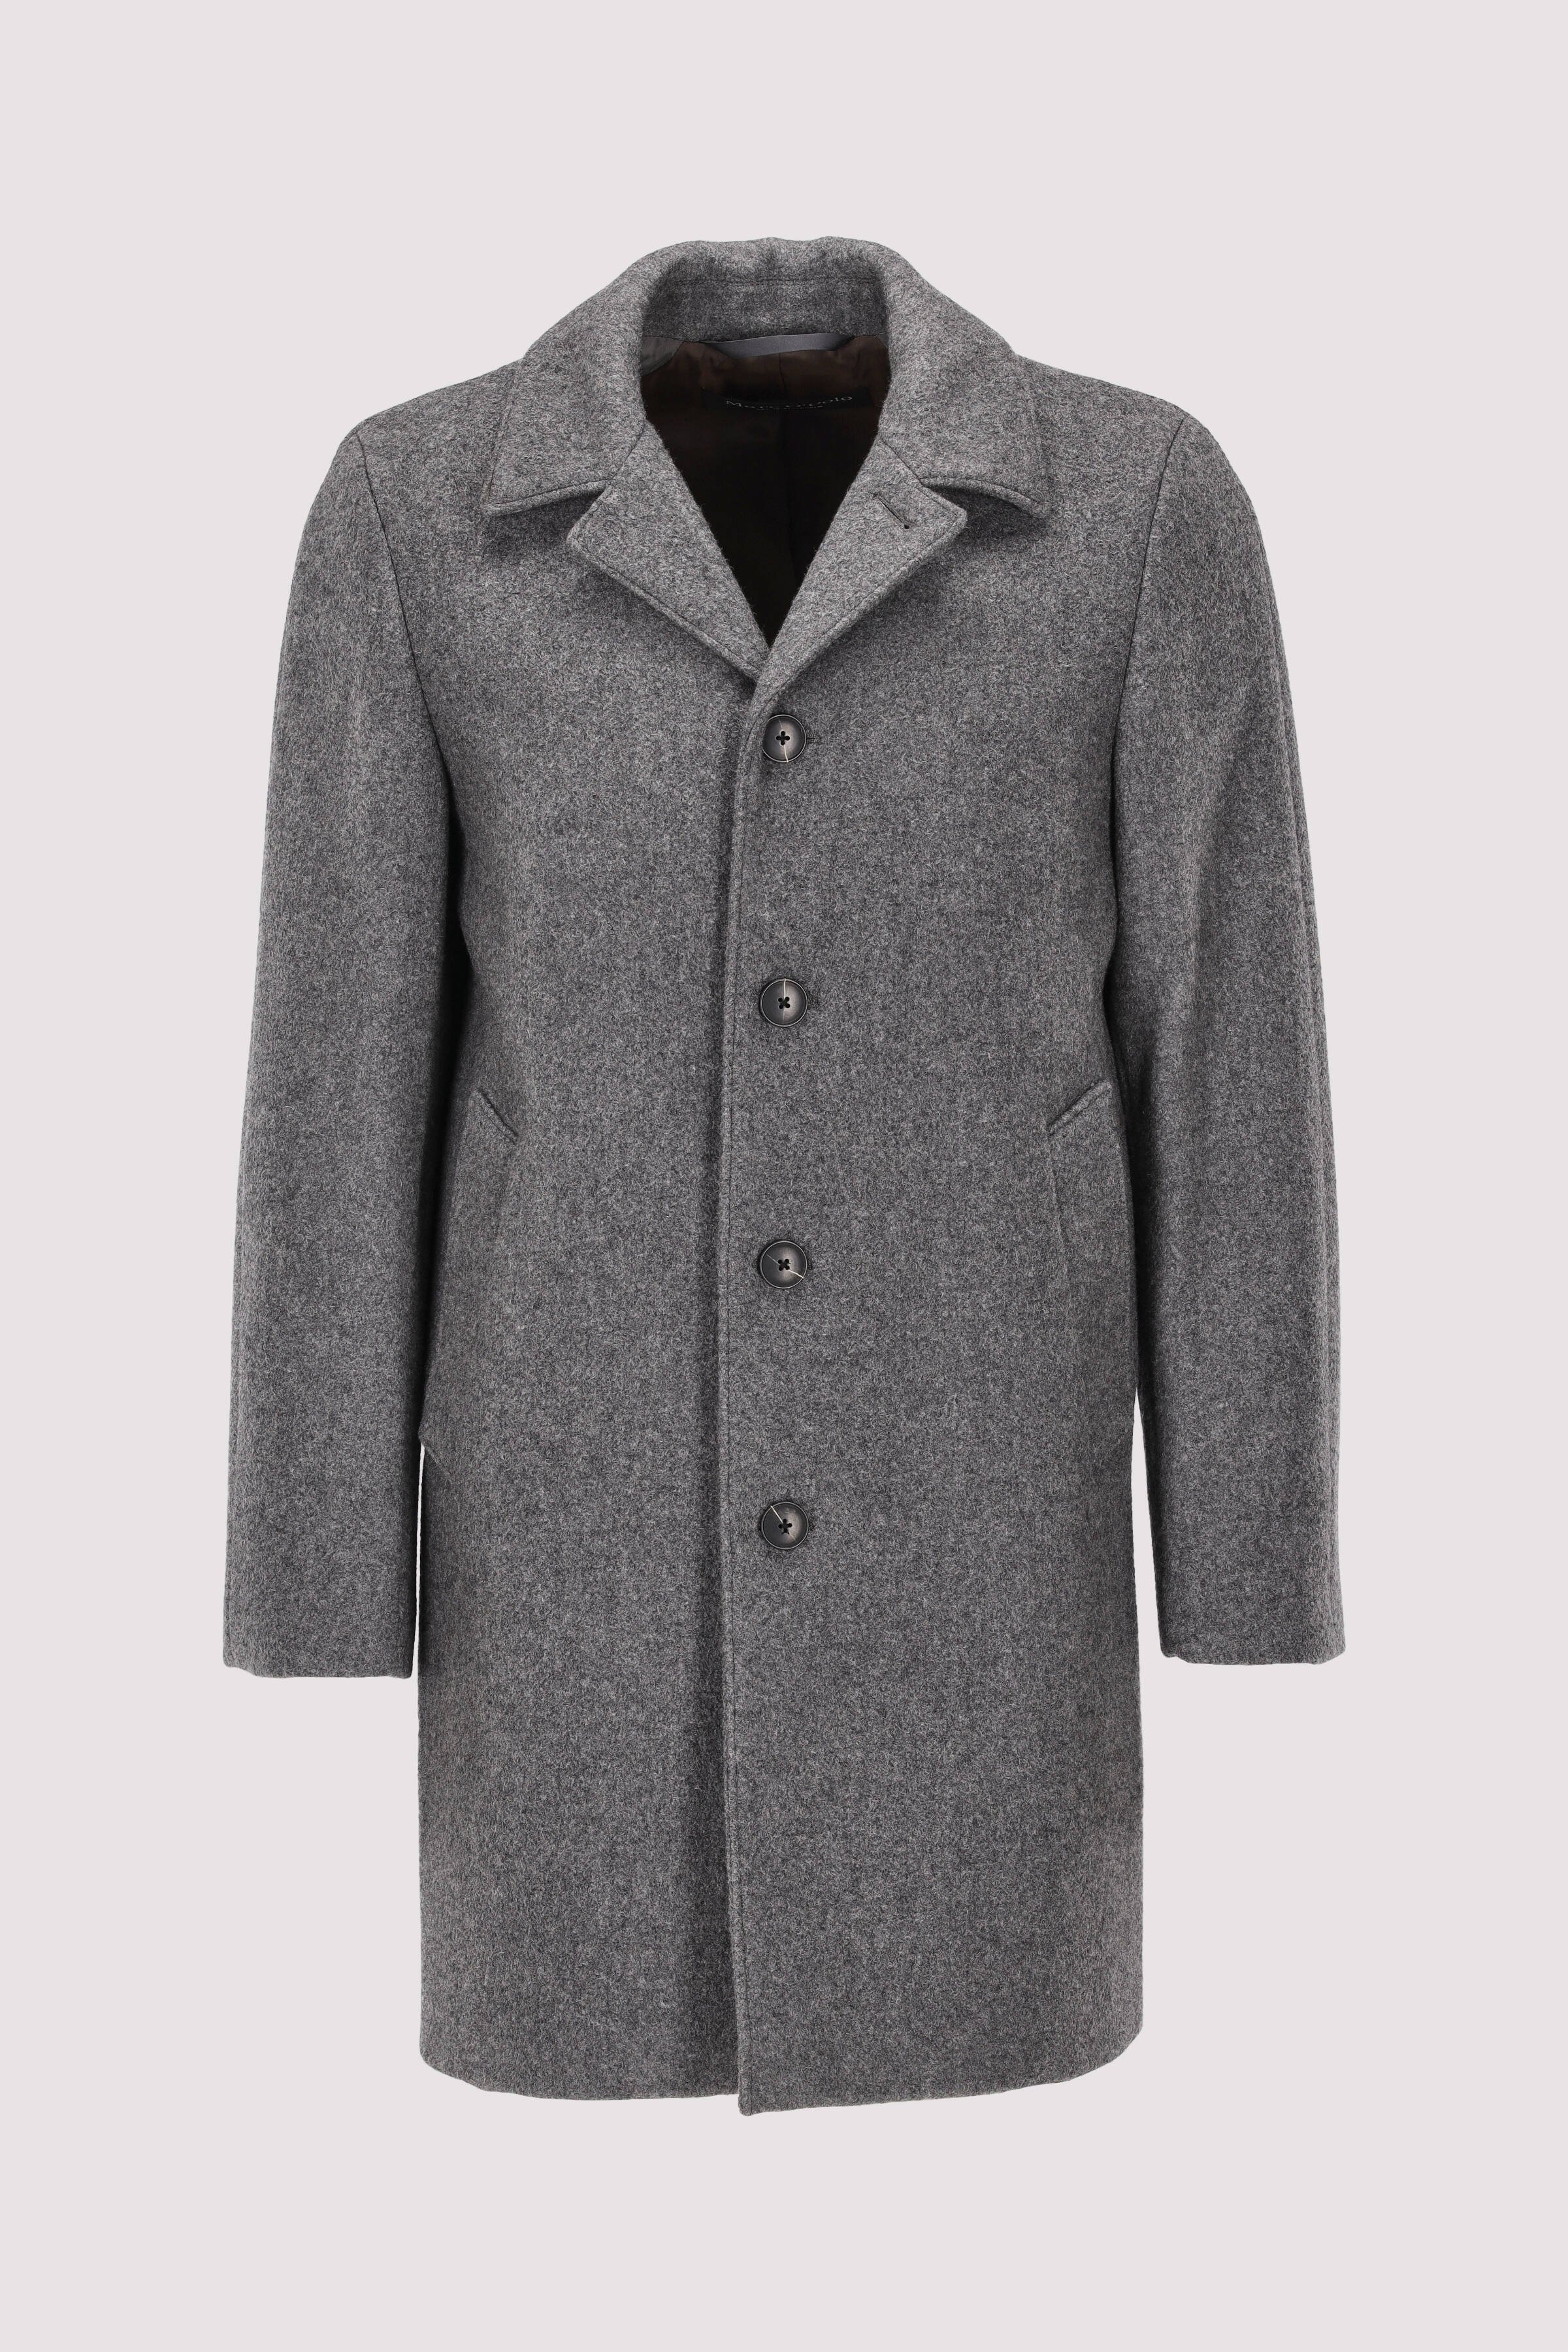 Coat, RWS-wool, slip-on lapel,